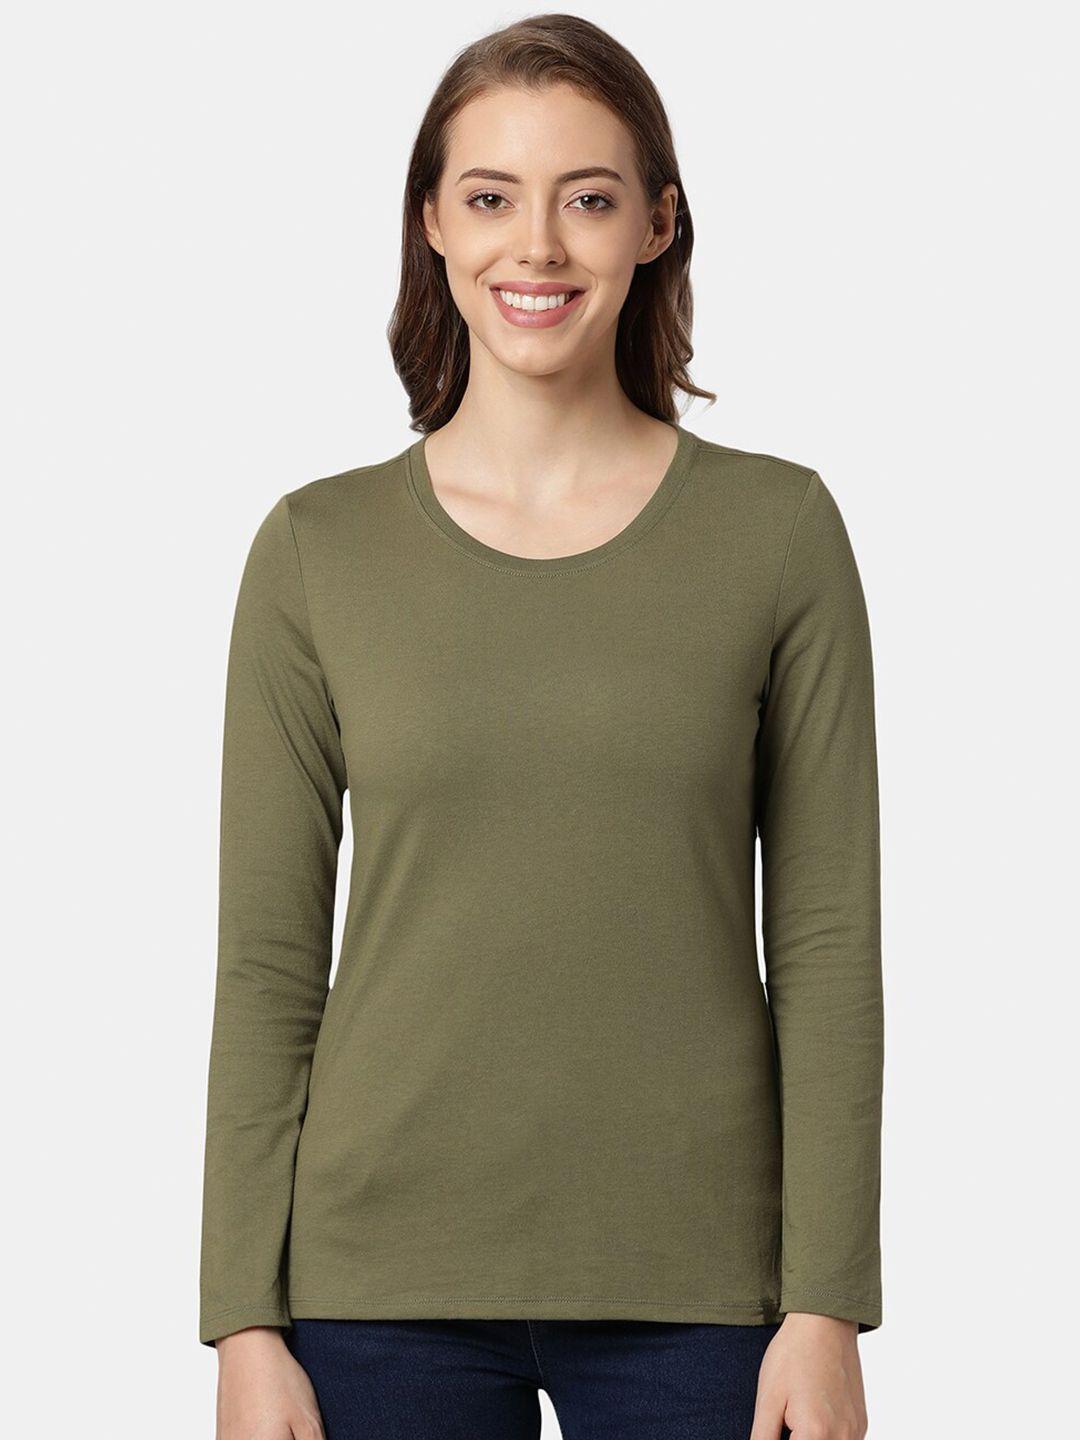 jockey women olive green cotton t-shirt